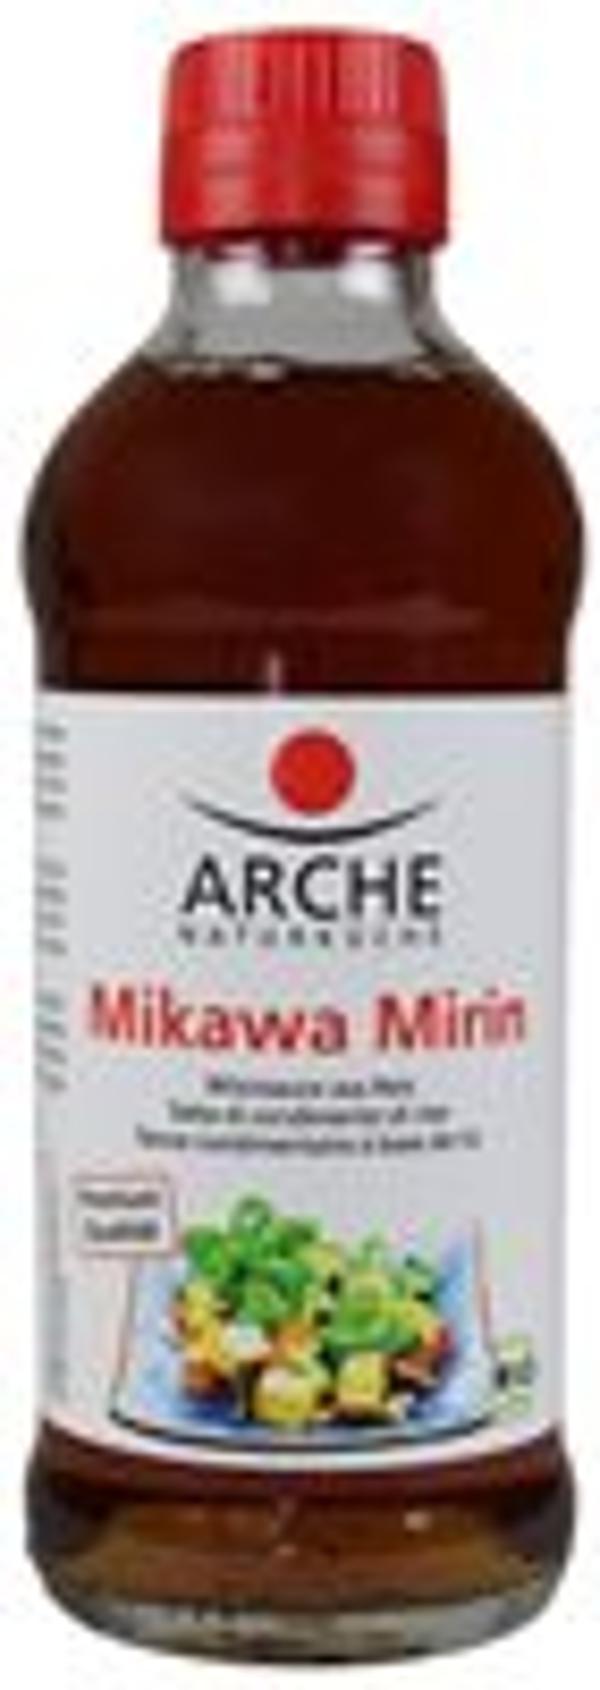 Produktfoto zu Mikawa Mirin - zum Würzen